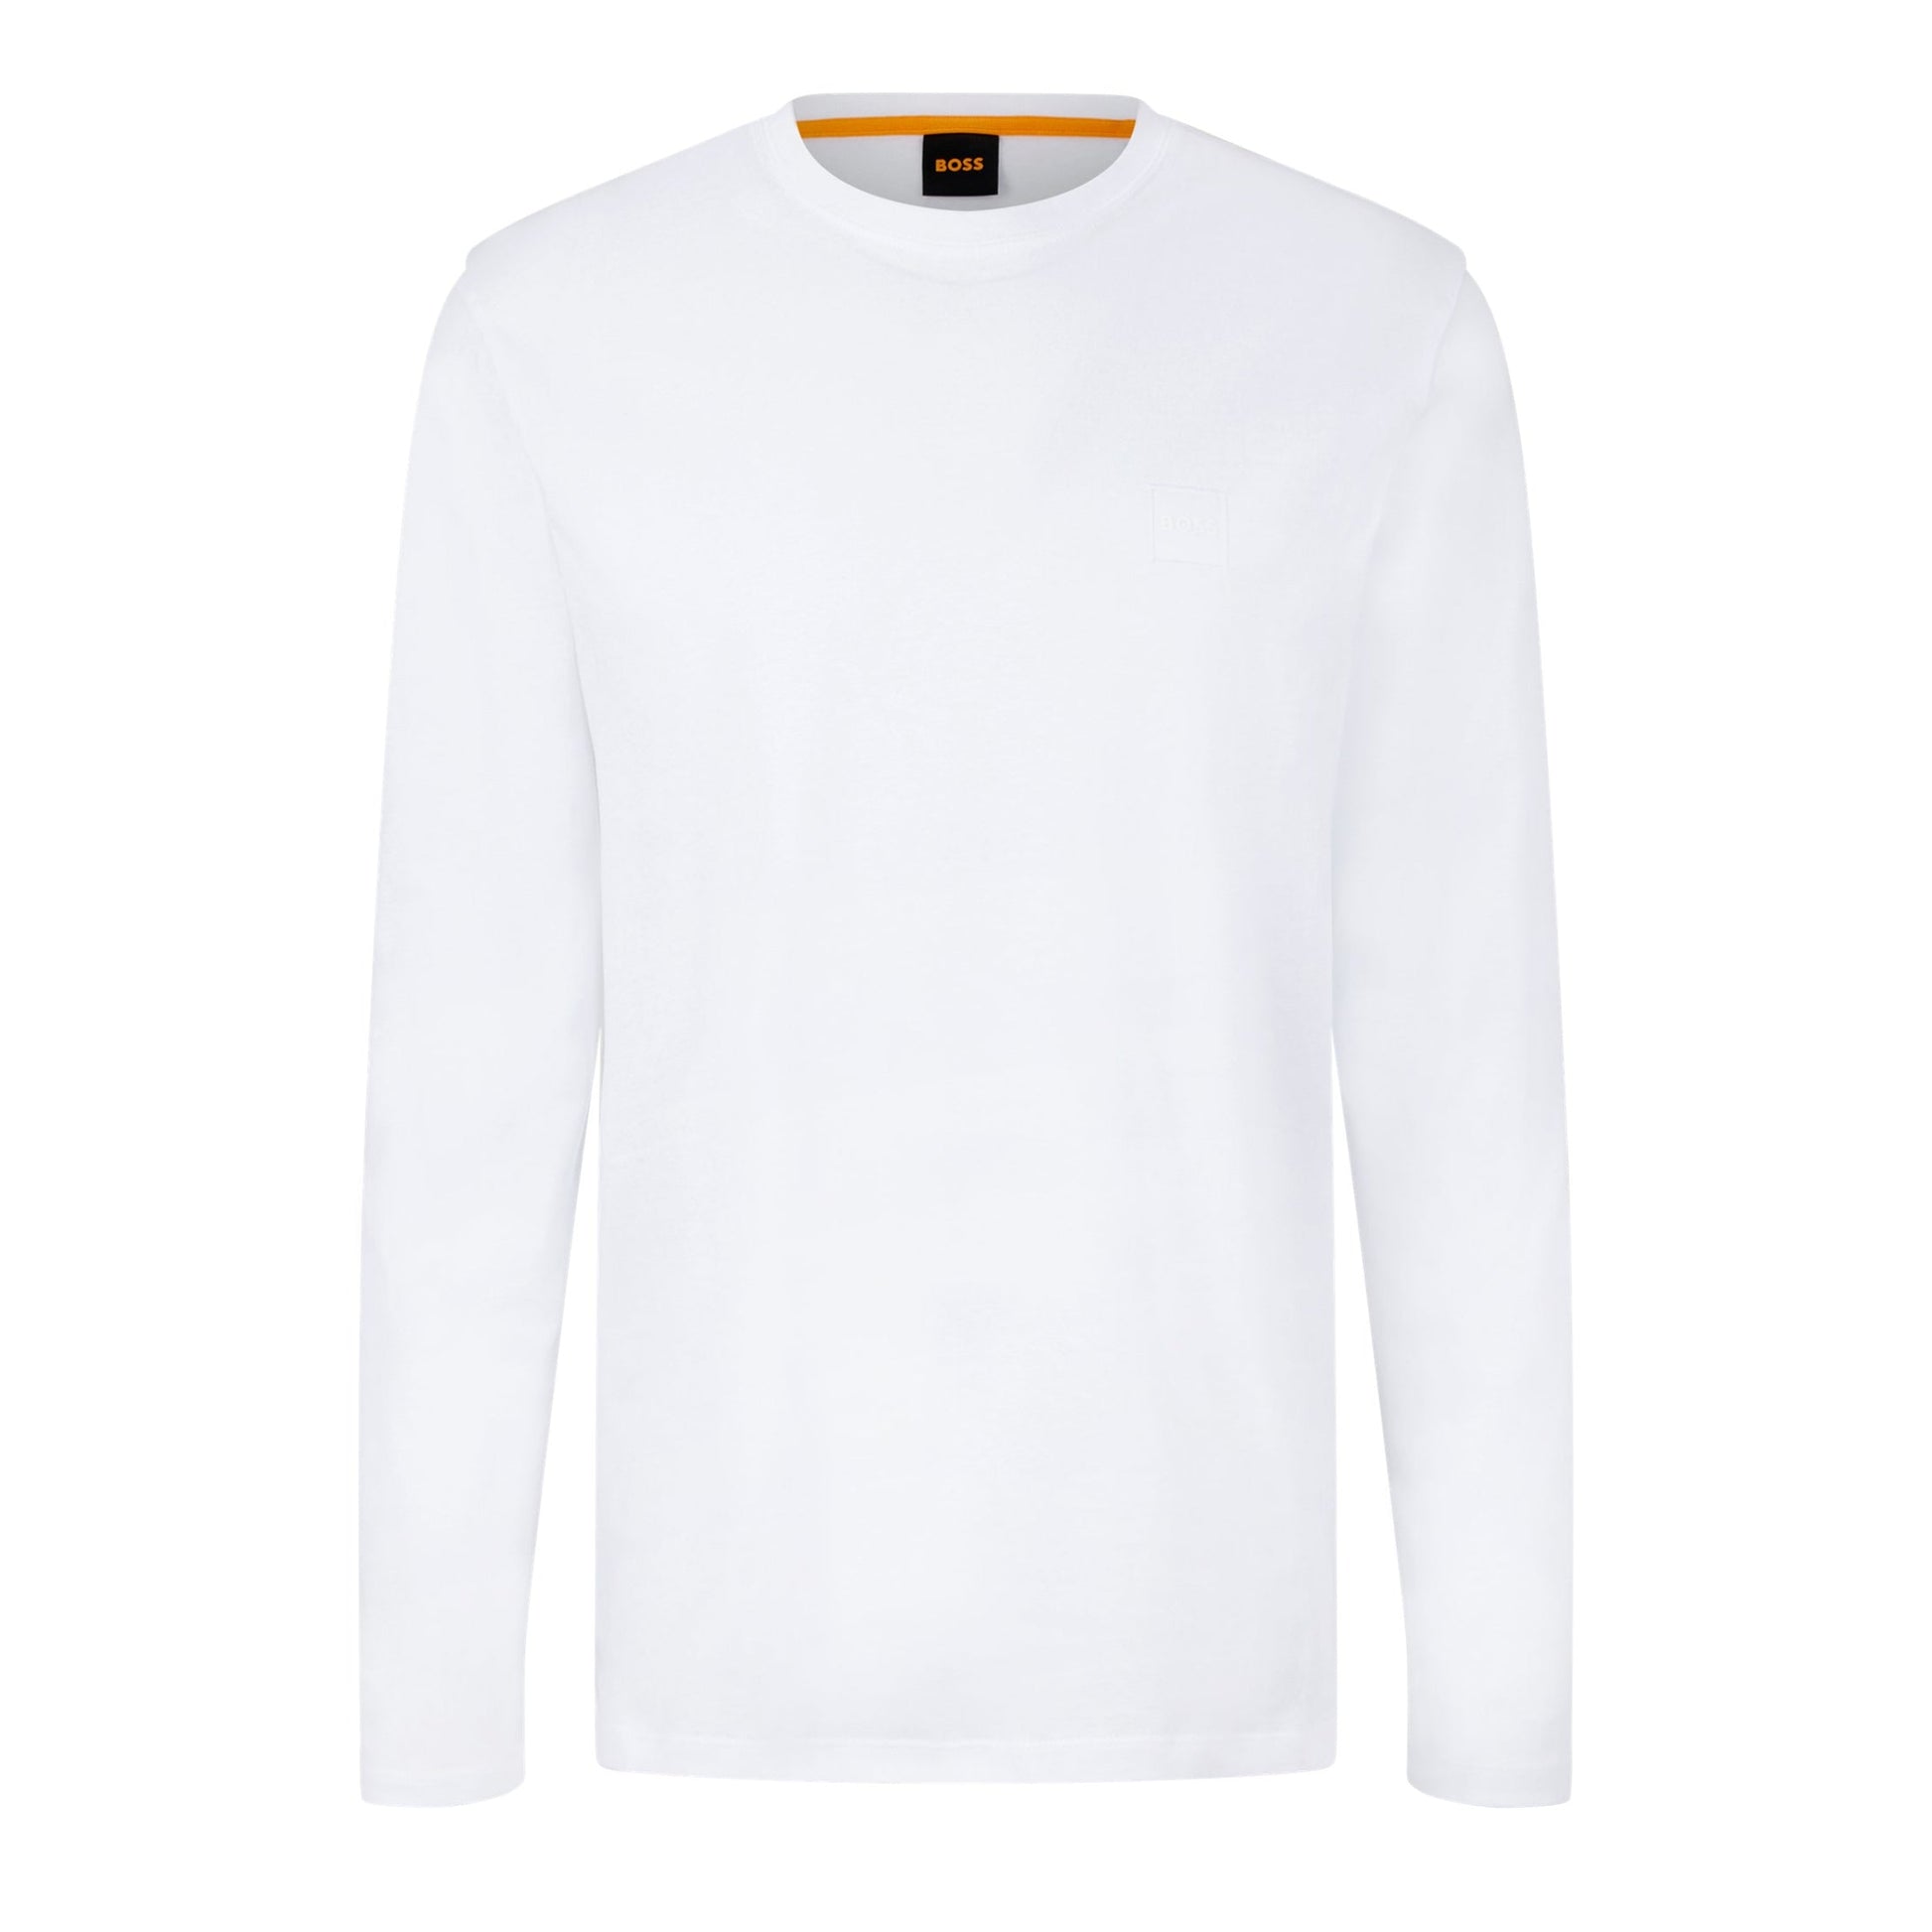 Boss Orange Tacks Long Sleeve T-Shirt - 100 White - Escape Menswear